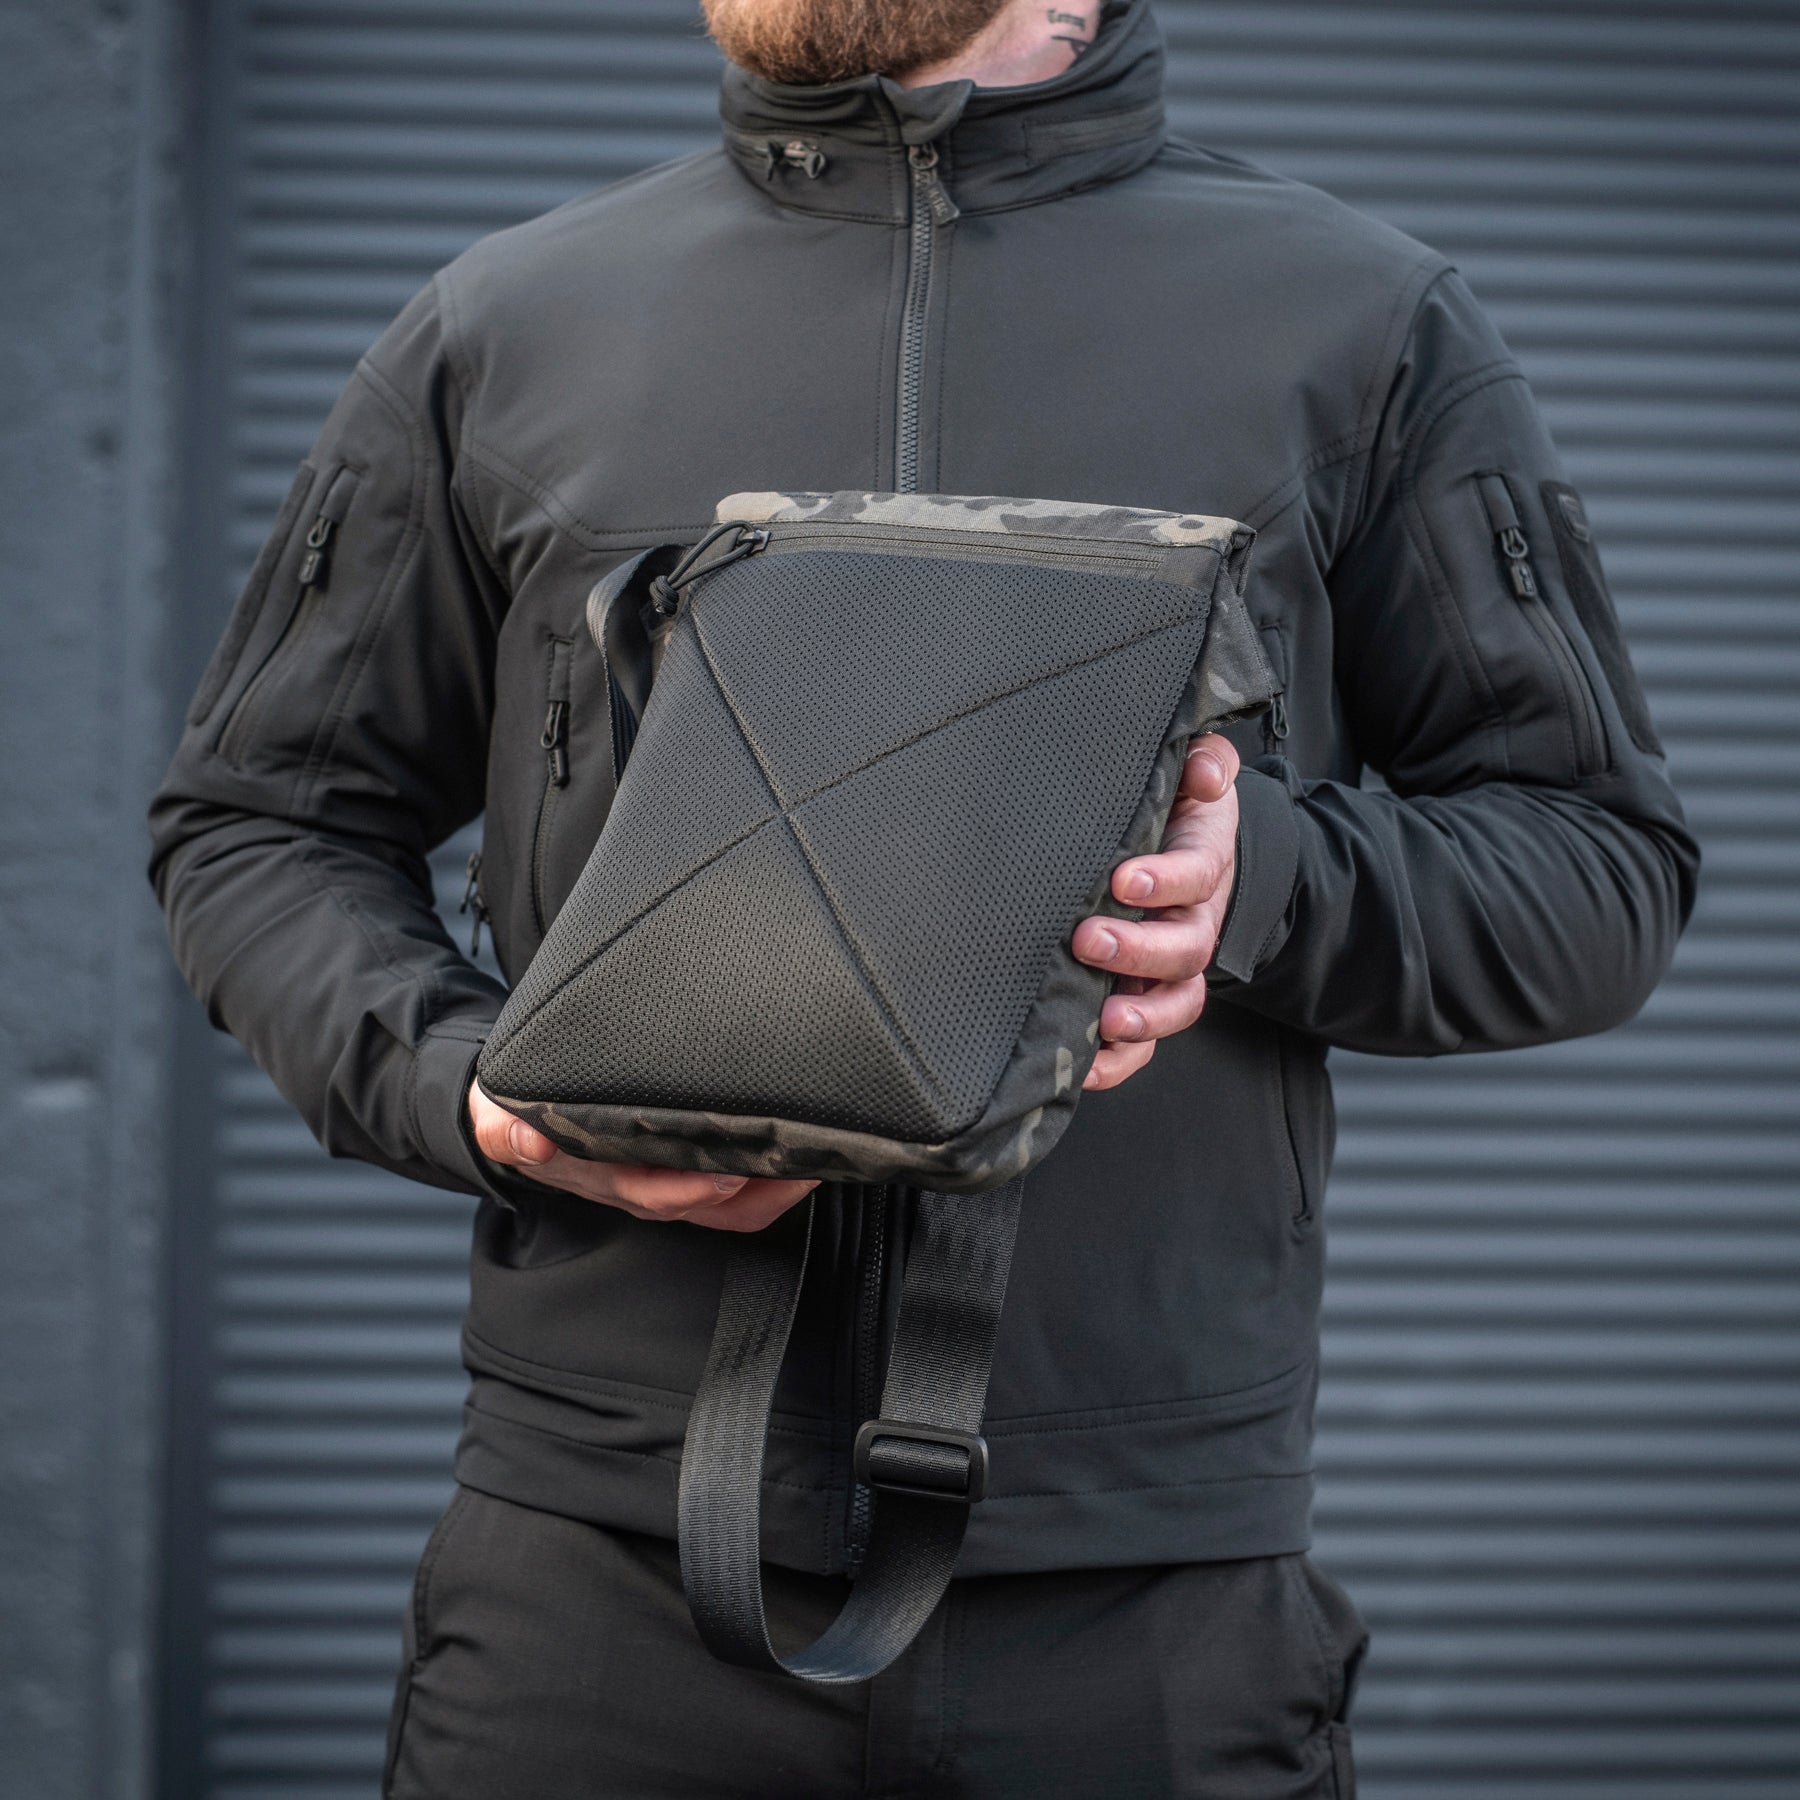 M-Tac Konvert Bag Elite Black